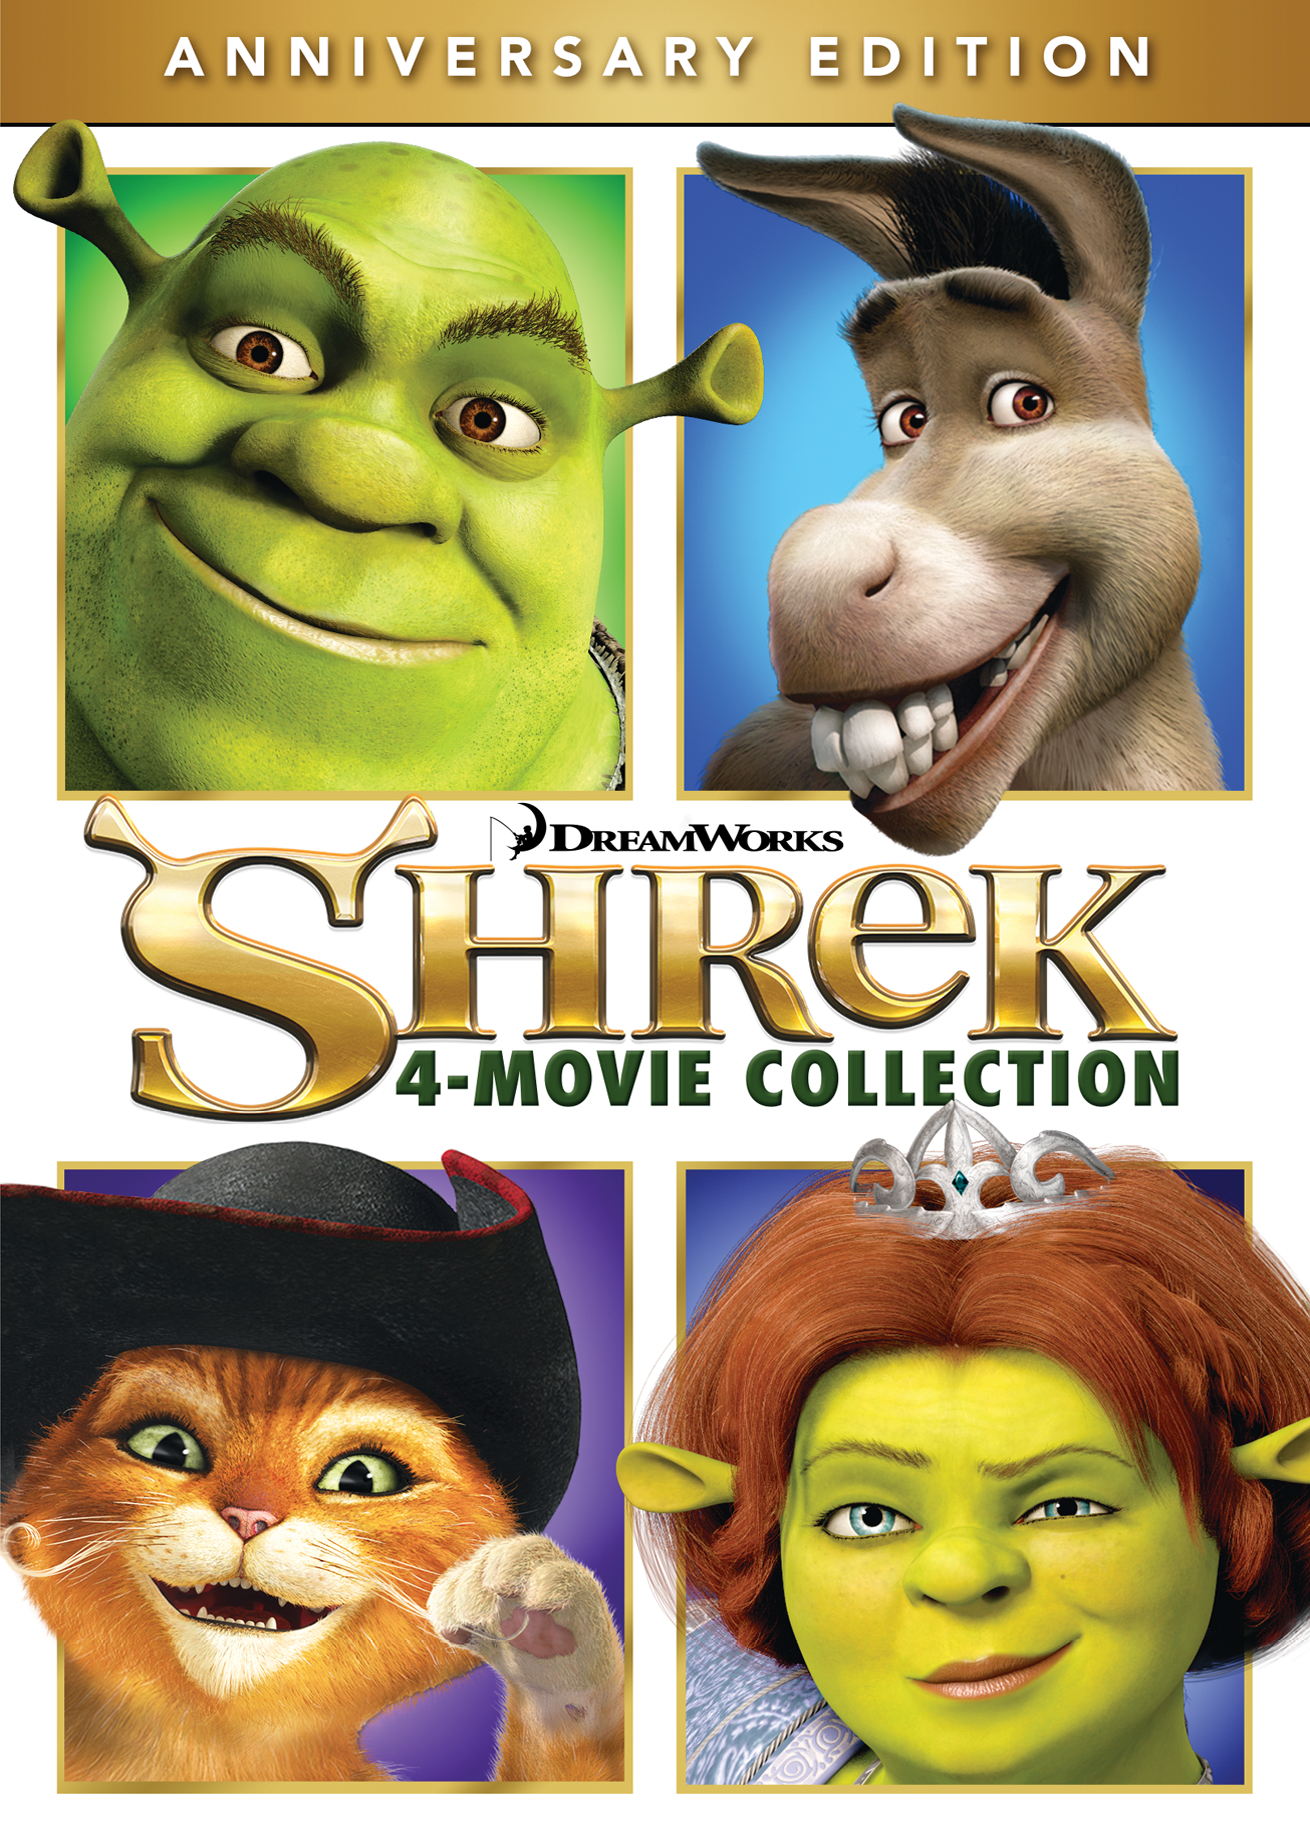 Shrek: The 4-movie Collection (Anniversary Edition) - DVD [ 2010 ]  - Children Movies On DVD - Movies On GRUV